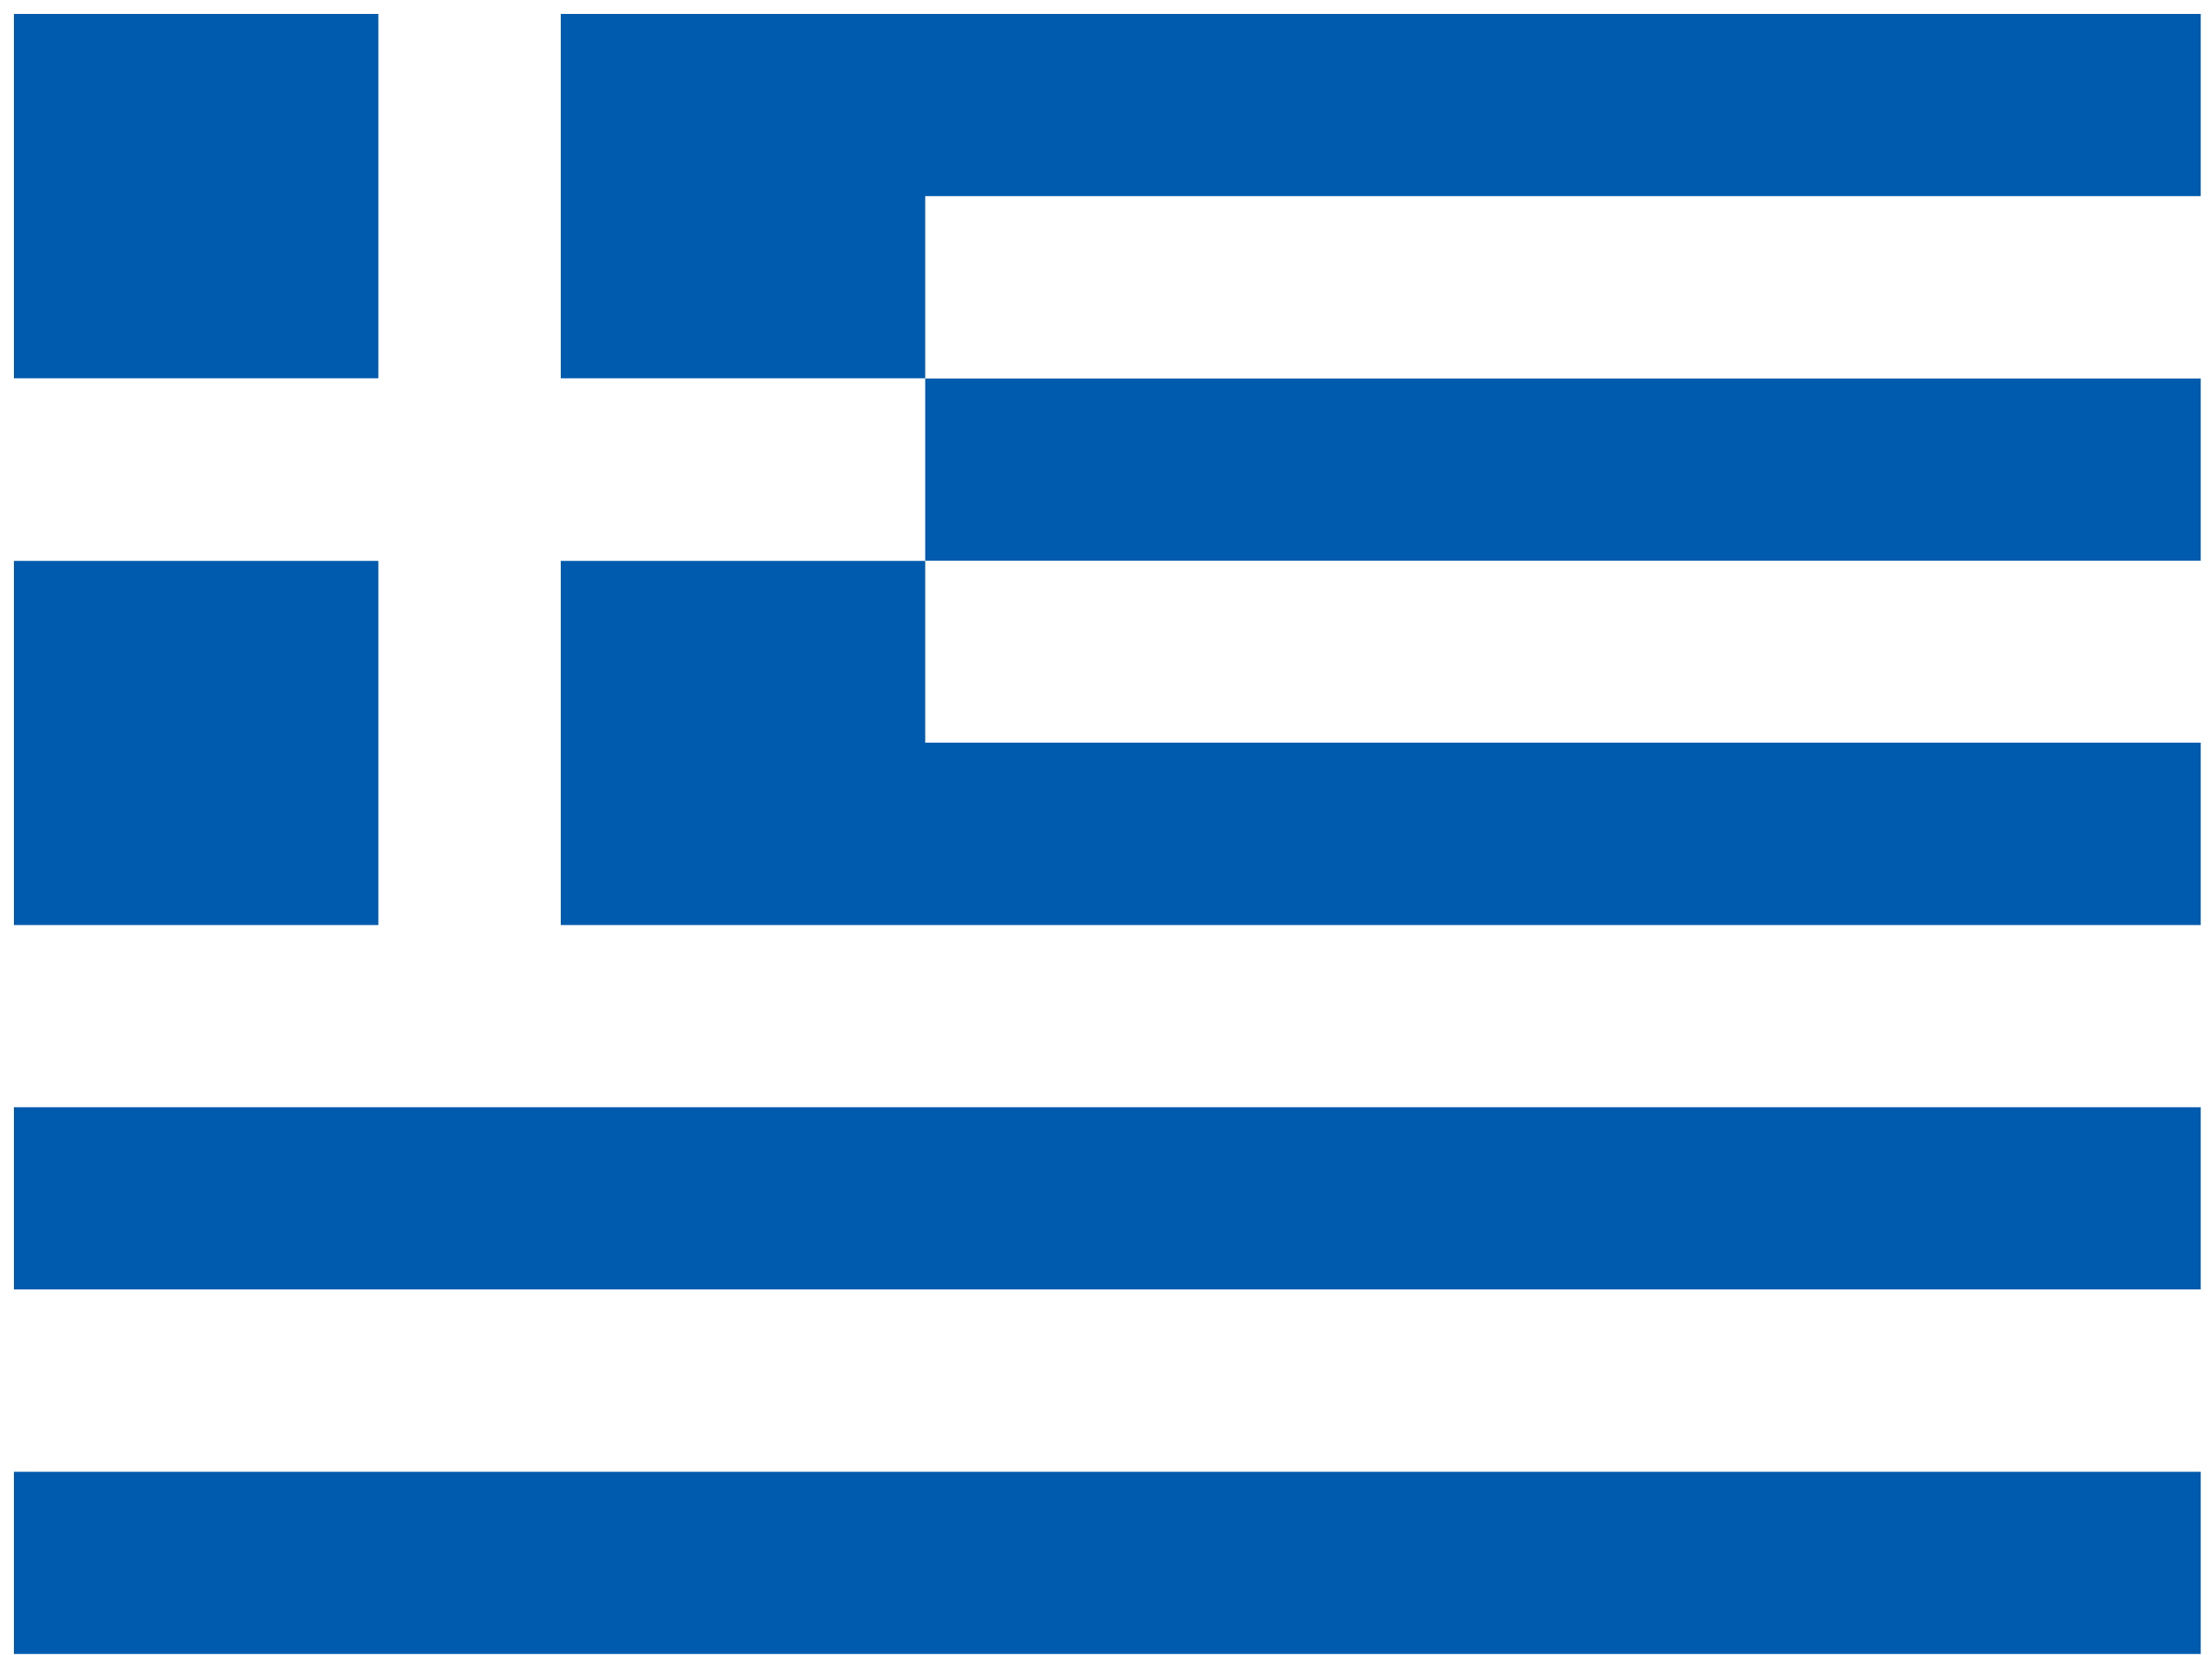 Griekenland vlag